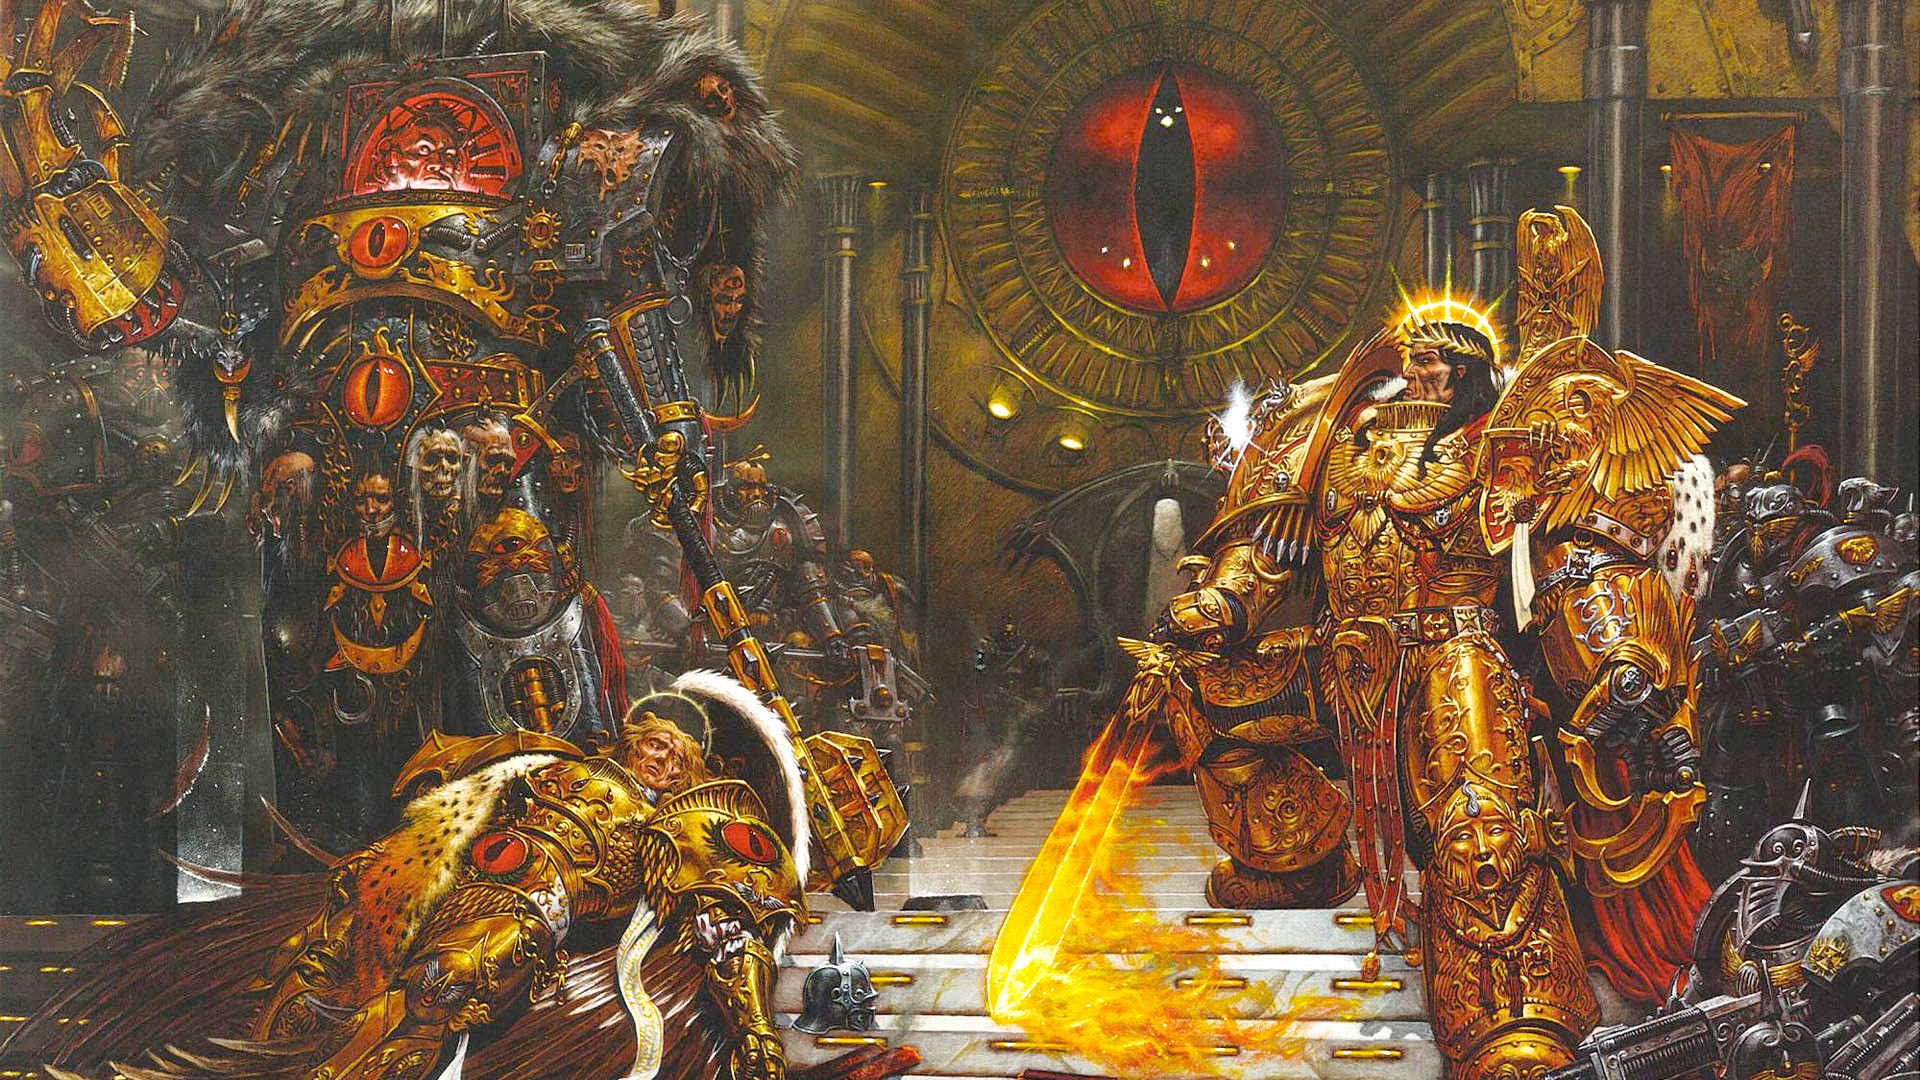 Warhammer 40k Emperor of Mankind guide - Games Workshop artwork showing the Emperor battling Horus on the Vengeful Spirit, next to Sanguinius' dead body